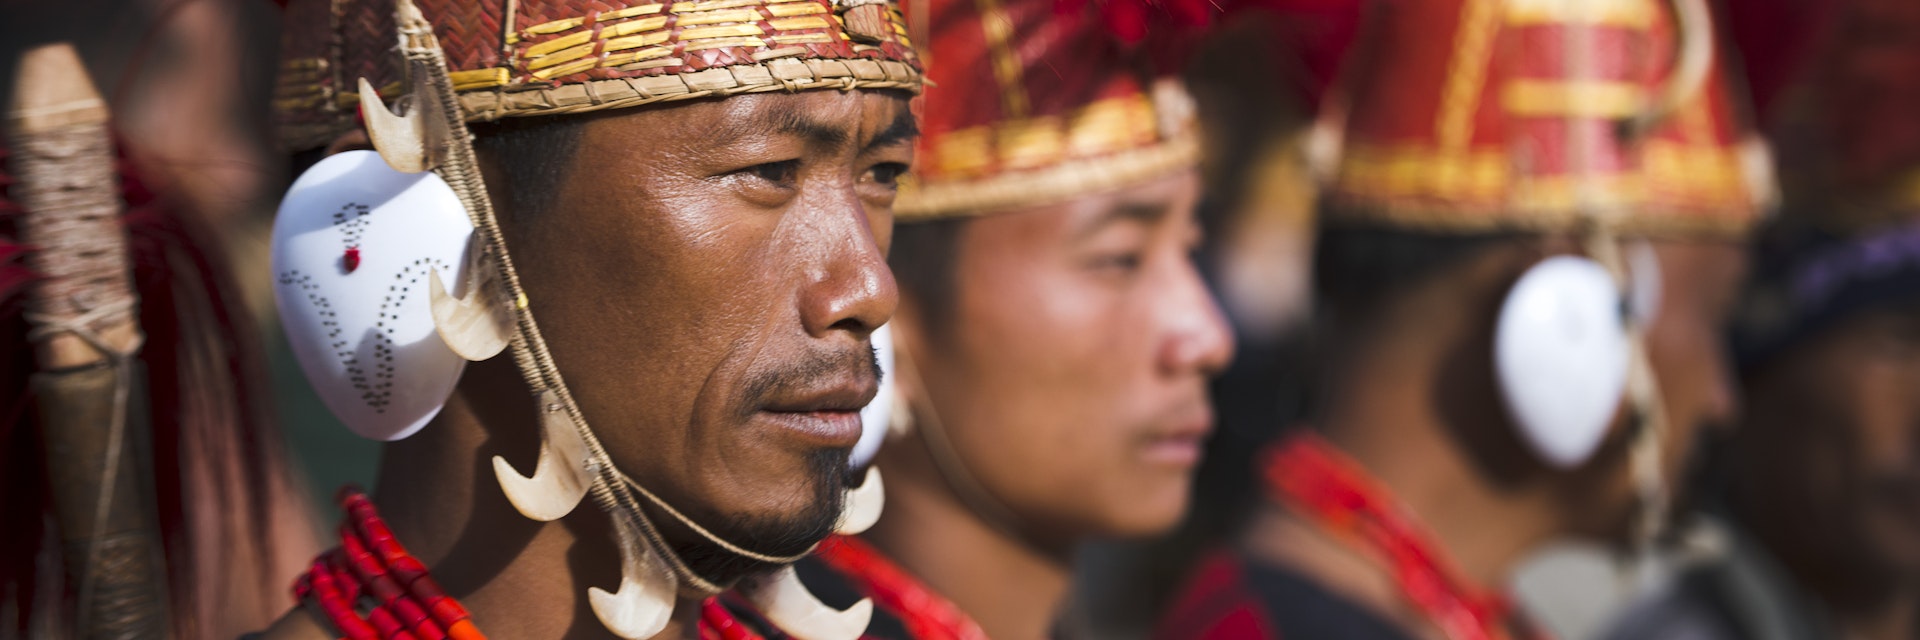 Naga tribal warriors in traditional outfit, Hornbill Festival, Kohima, Nagaland, India